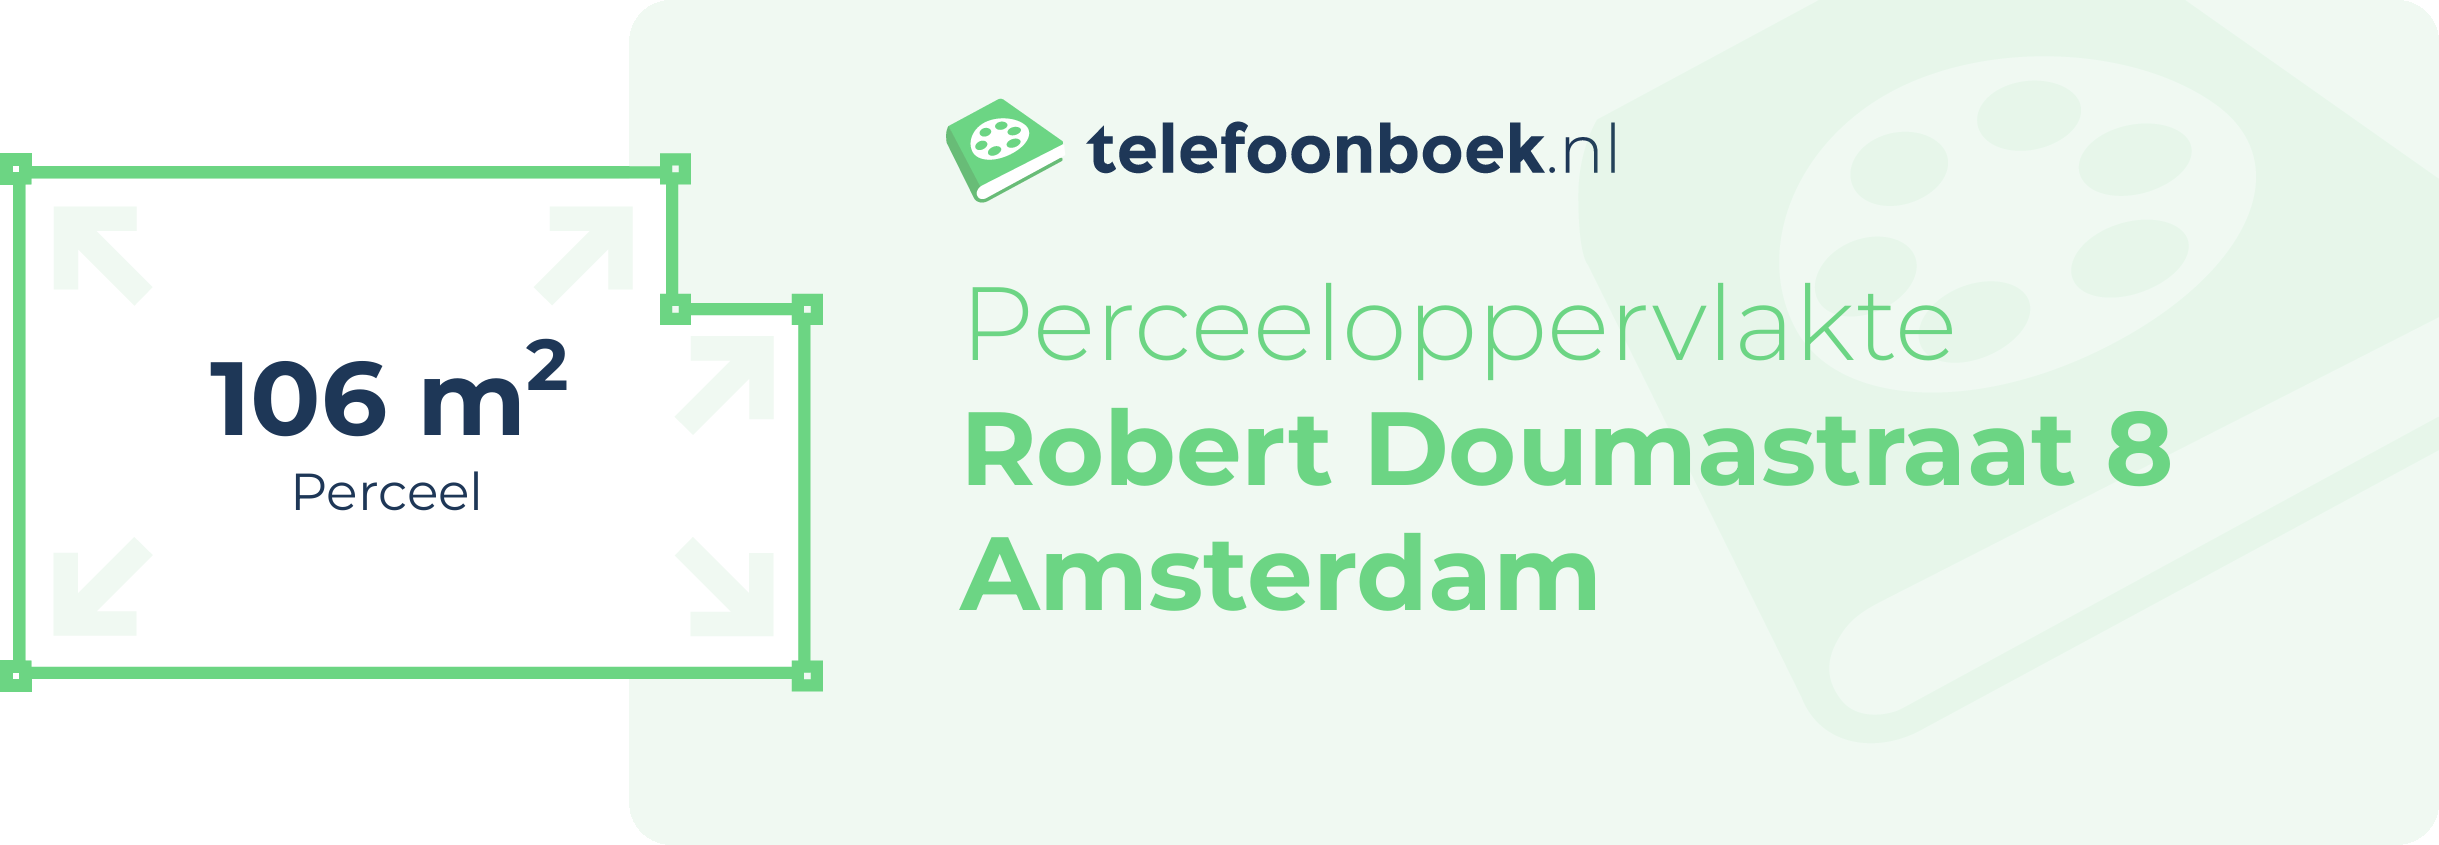 Perceeloppervlakte Robert Doumastraat 8 Amsterdam